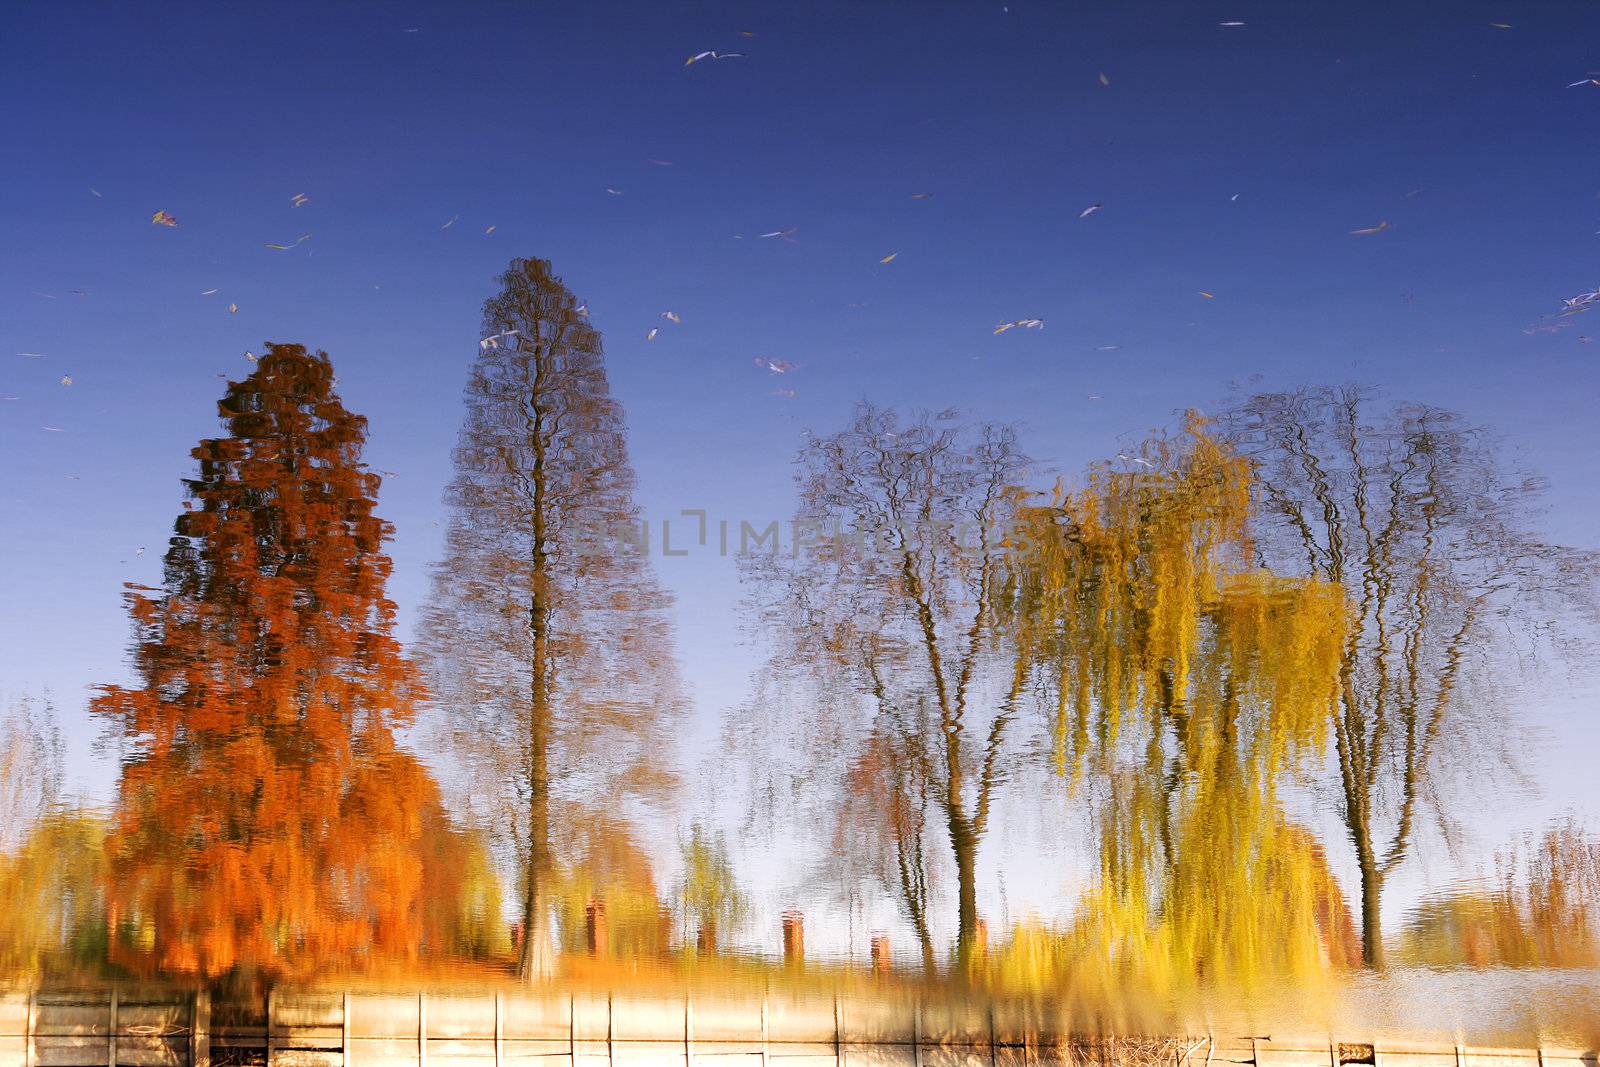 Trees reflection in water by cristiaciobanu